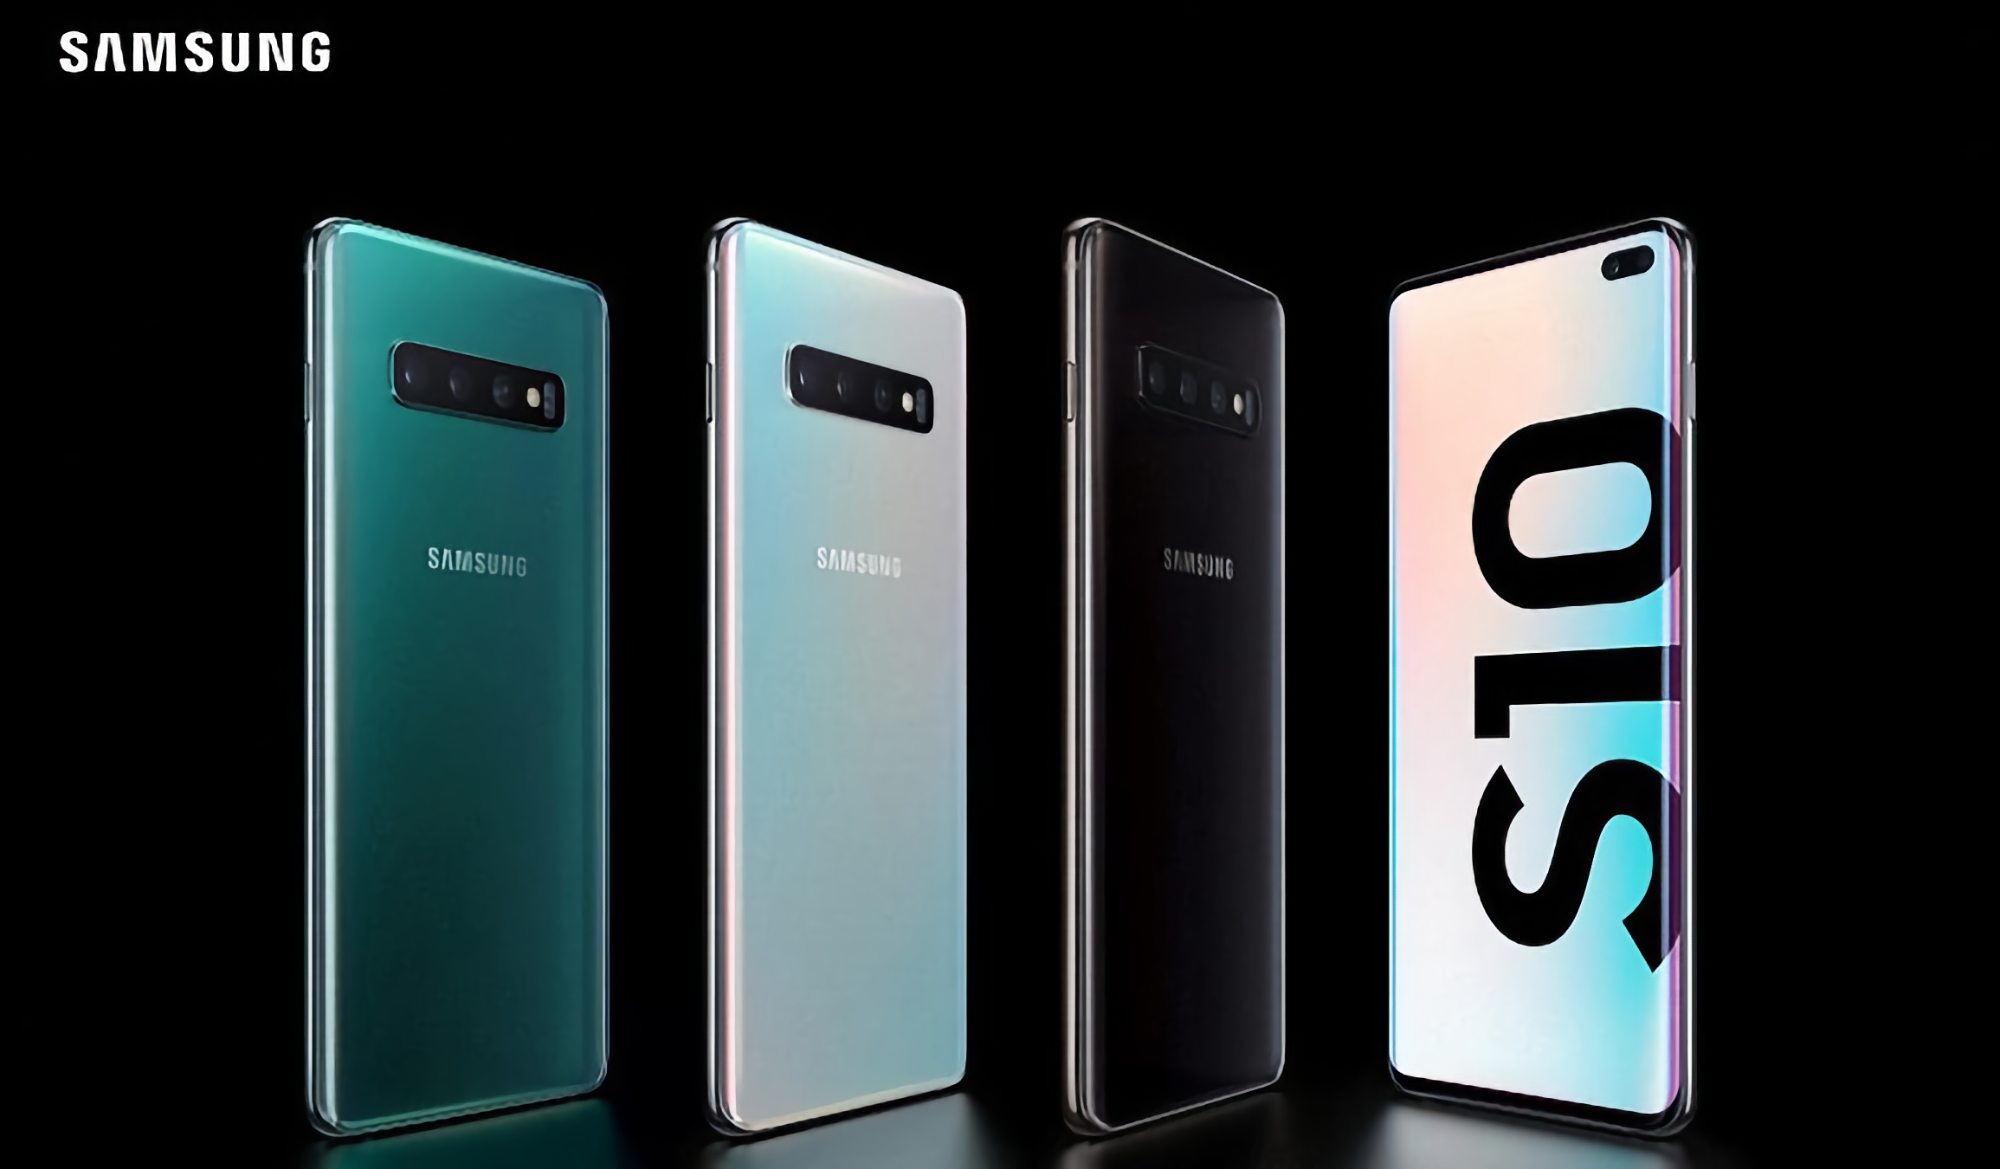 Samsung Galaxy S10e, Galaxy S10, Galaxy S10+ and Galaxy S20 FE began receiving September updates